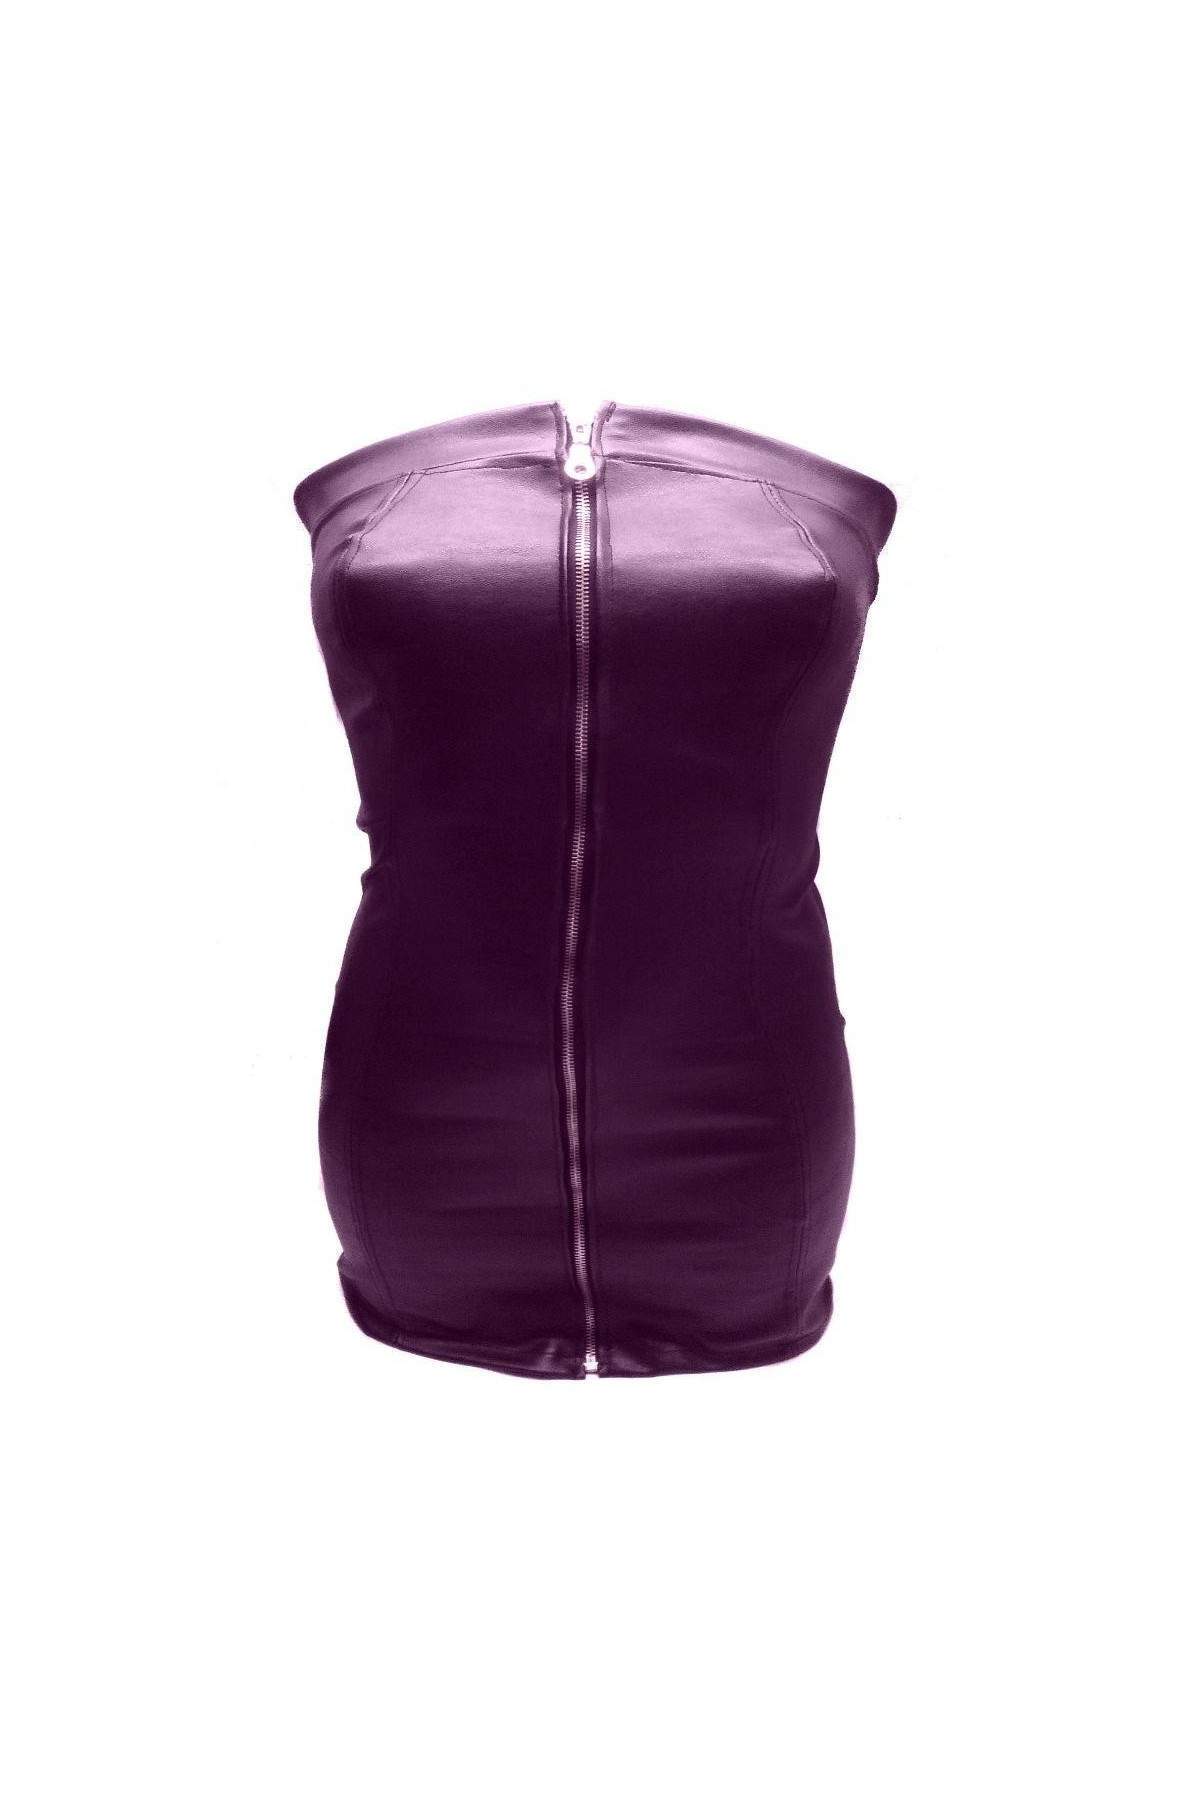 Designer Softleder Kleid lila Größe L - XXL (44 - 52) ab 35,00 € - 